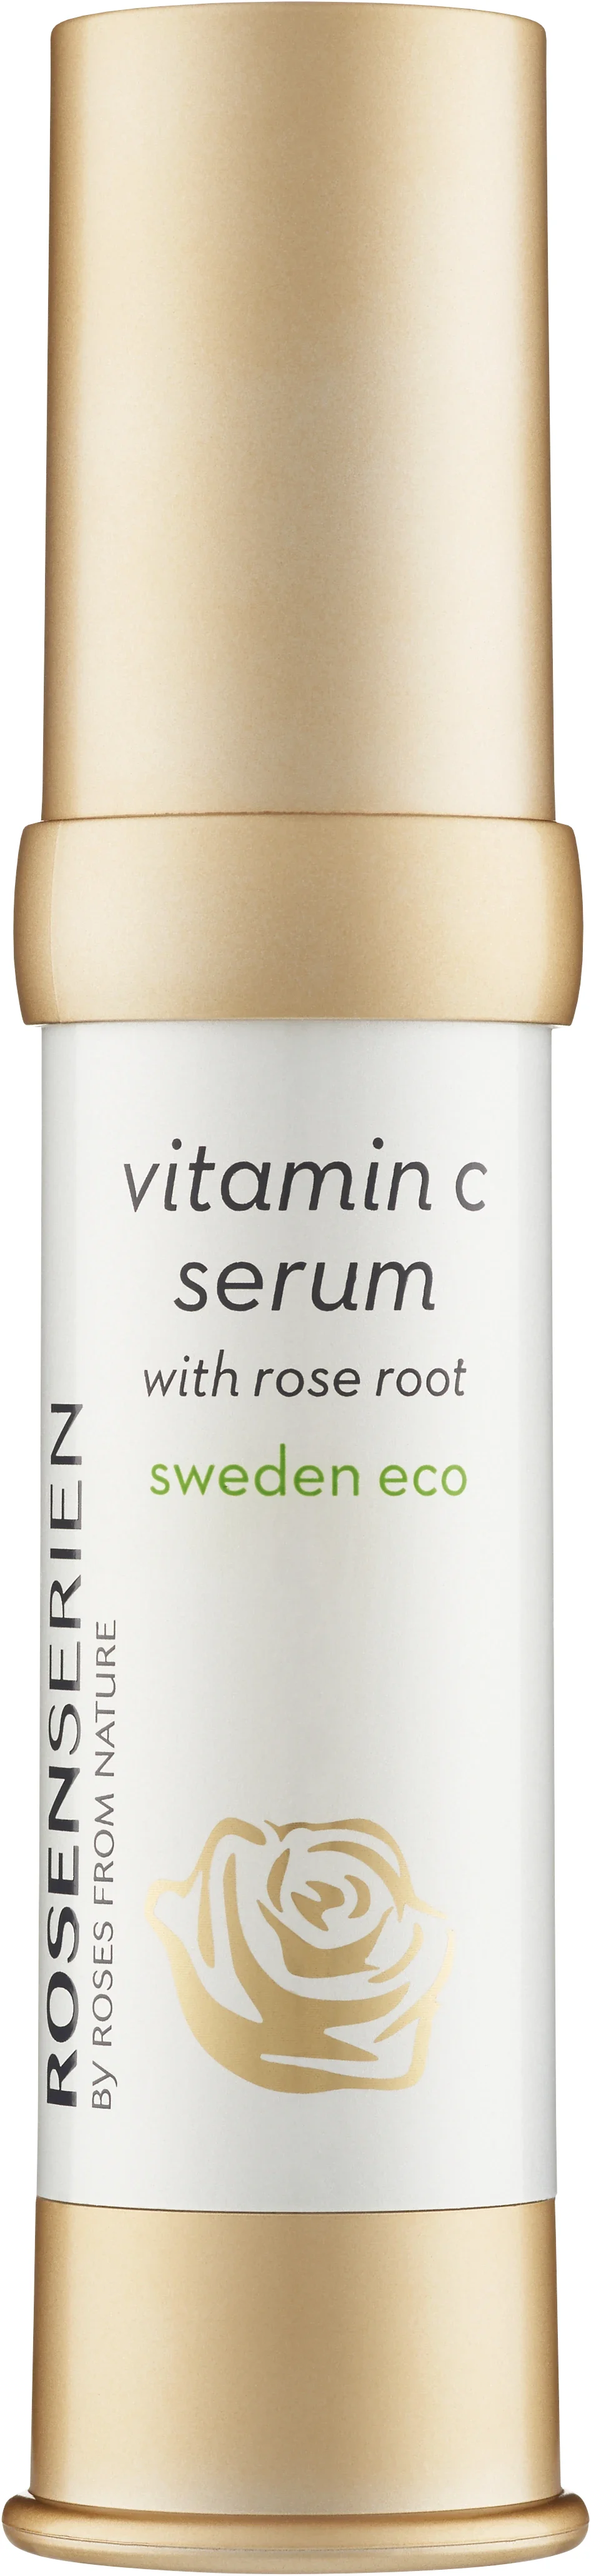 Rosenserien Vitamin C Serum with Rose Root, 20 ml